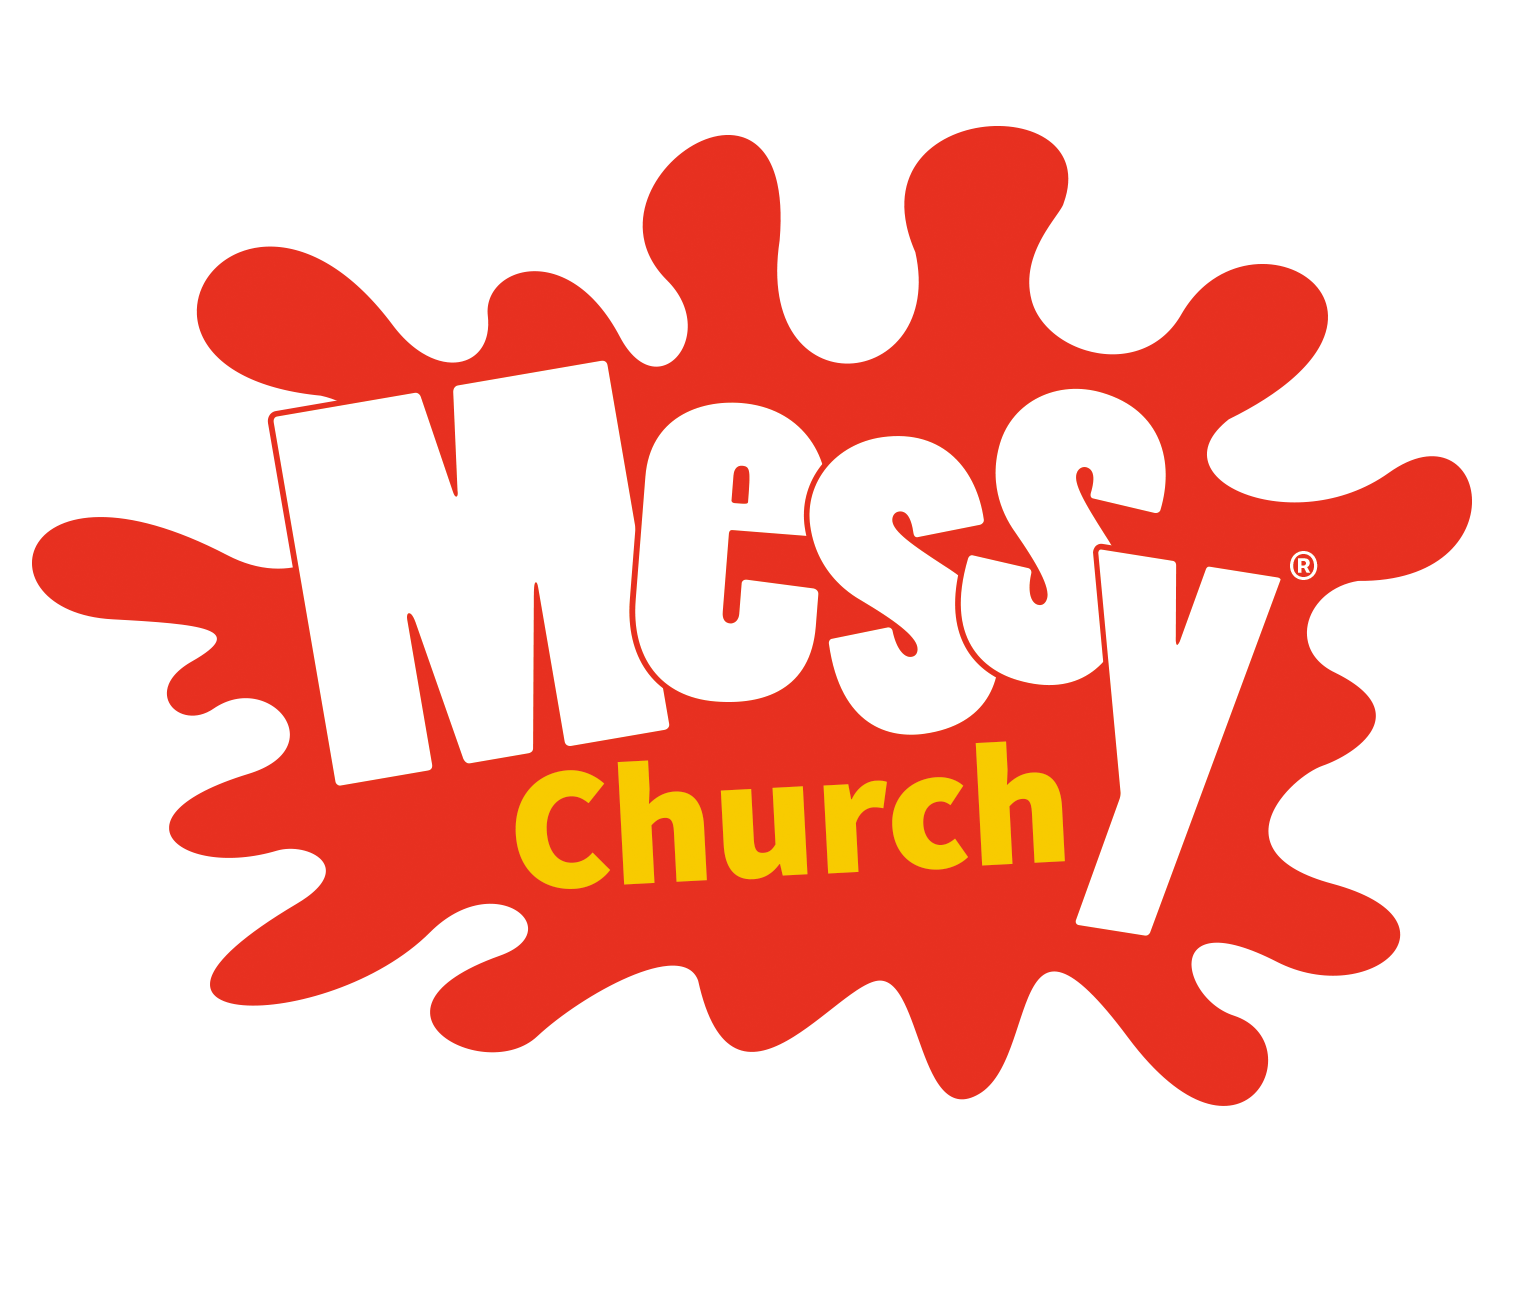 Messy Church logo-« for online